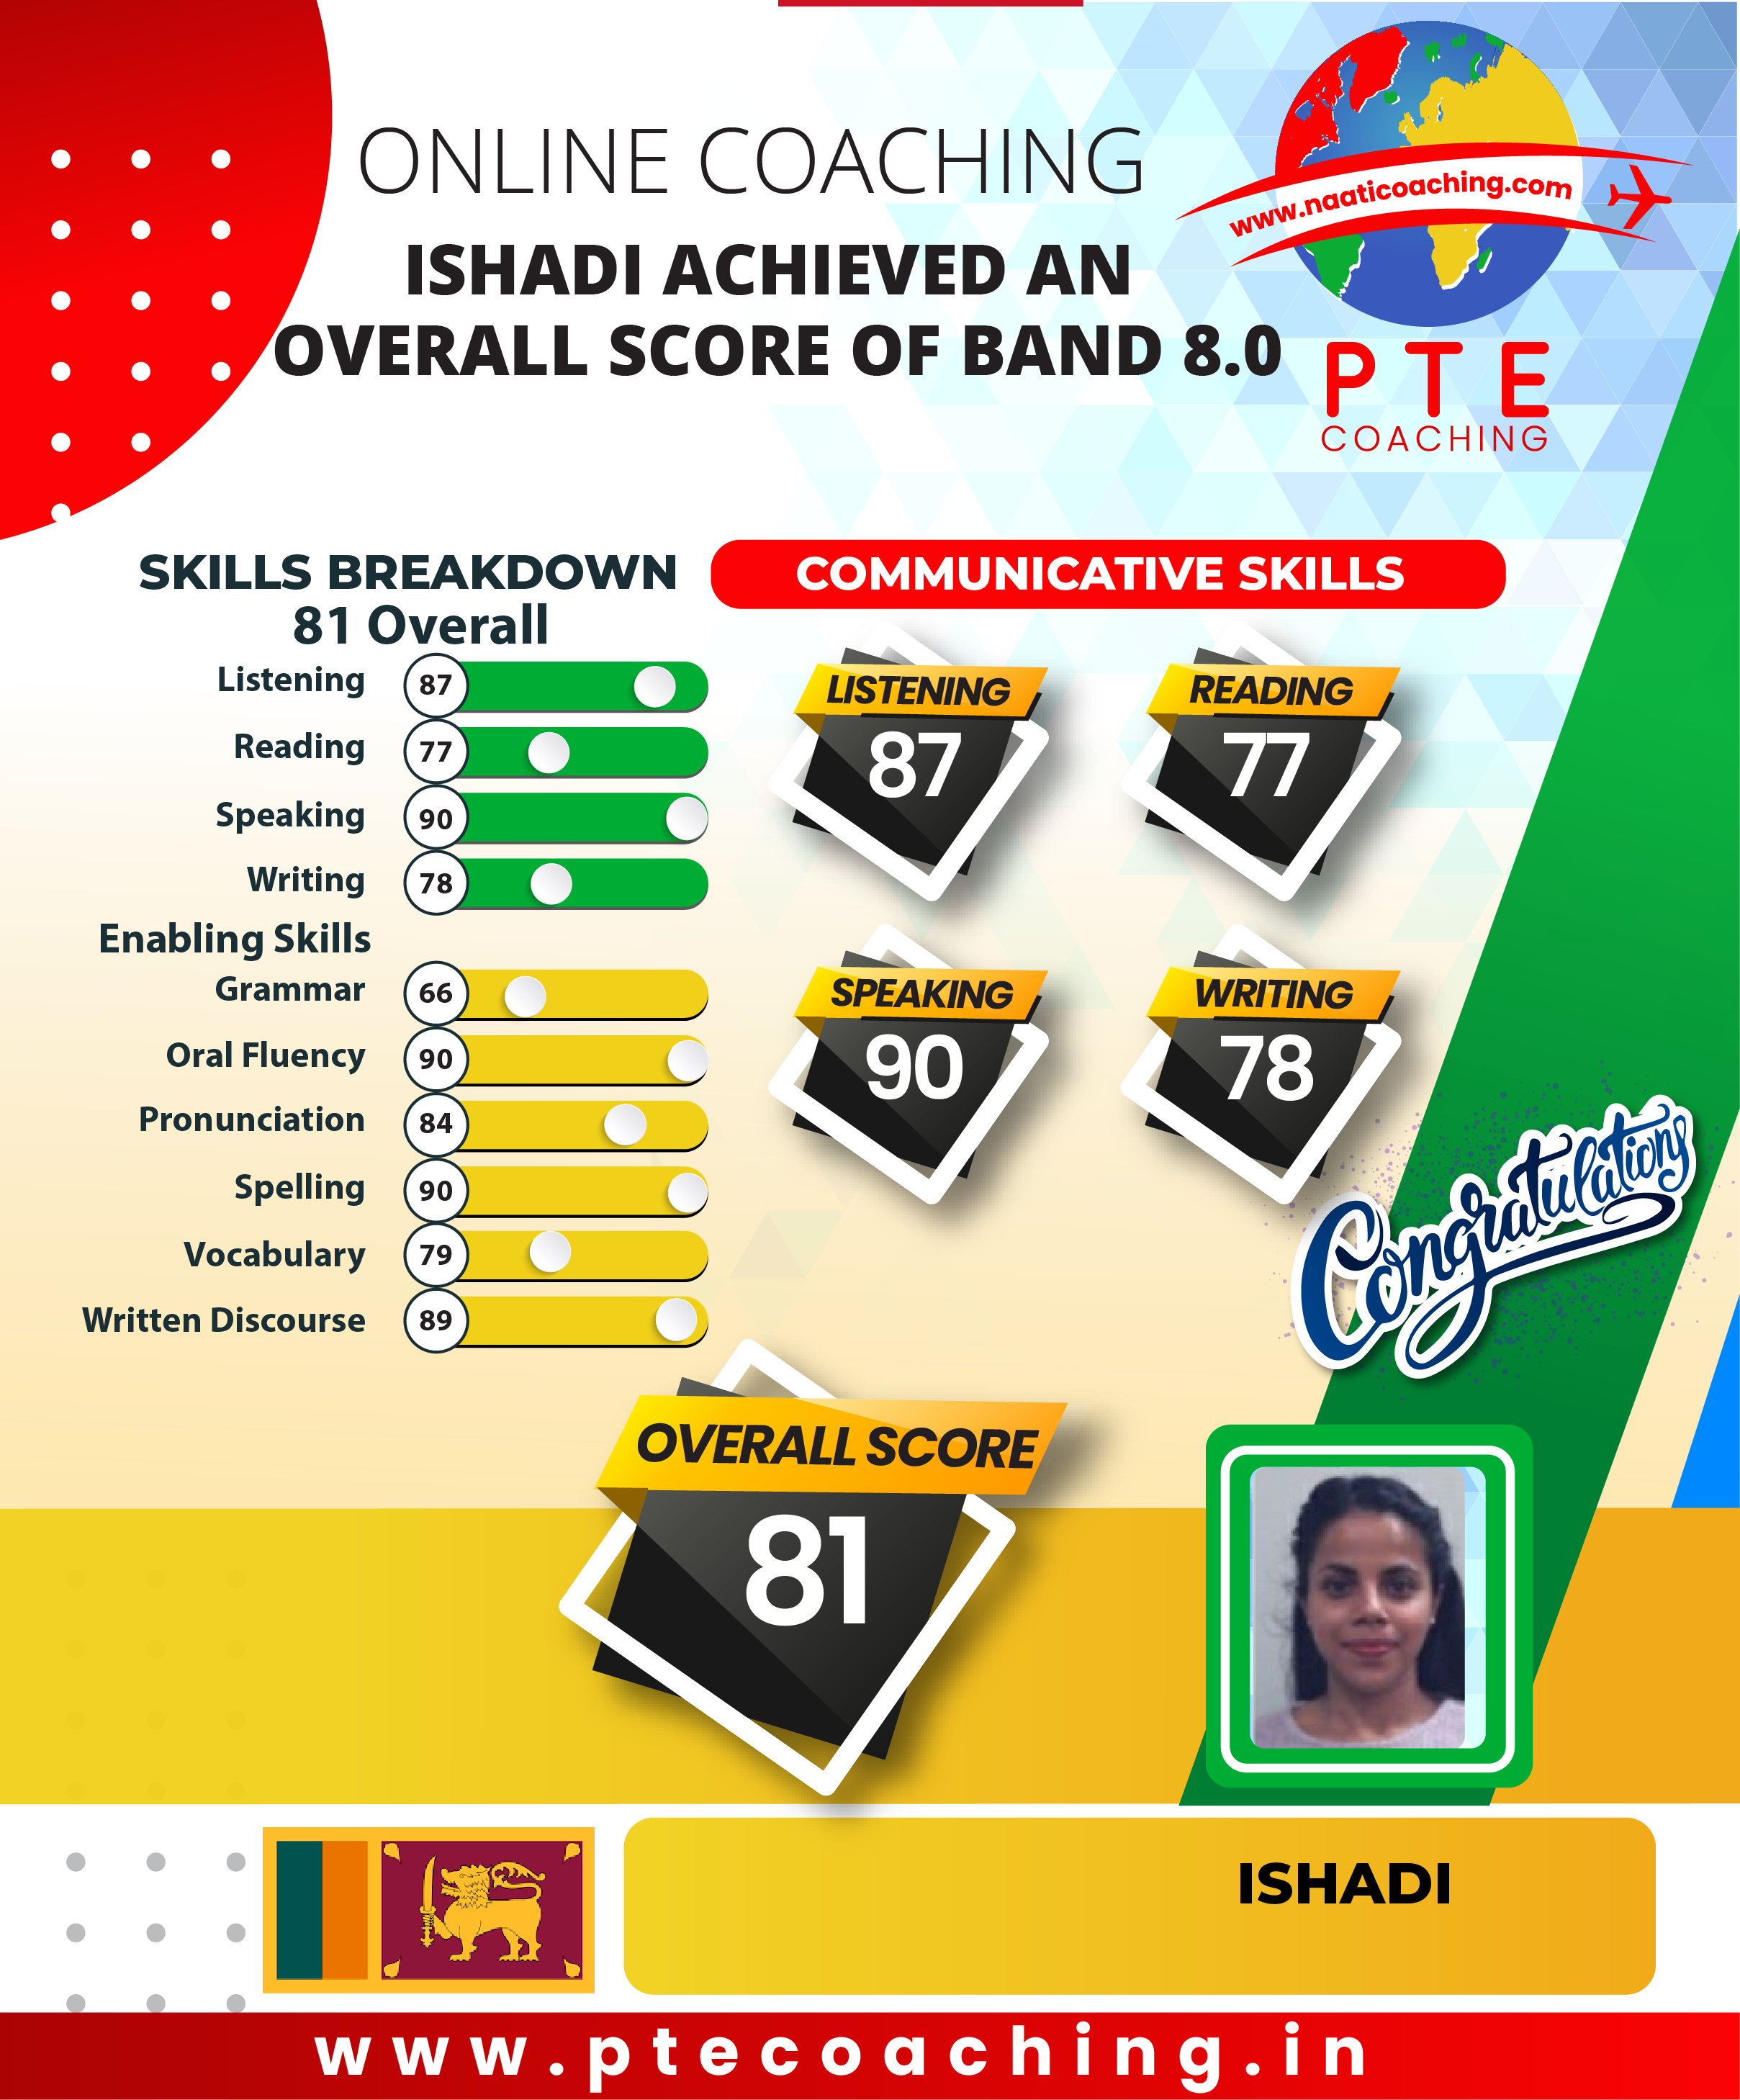 PTE Coaching Scorecard - Ishadi achieved an overall score of band 8.0